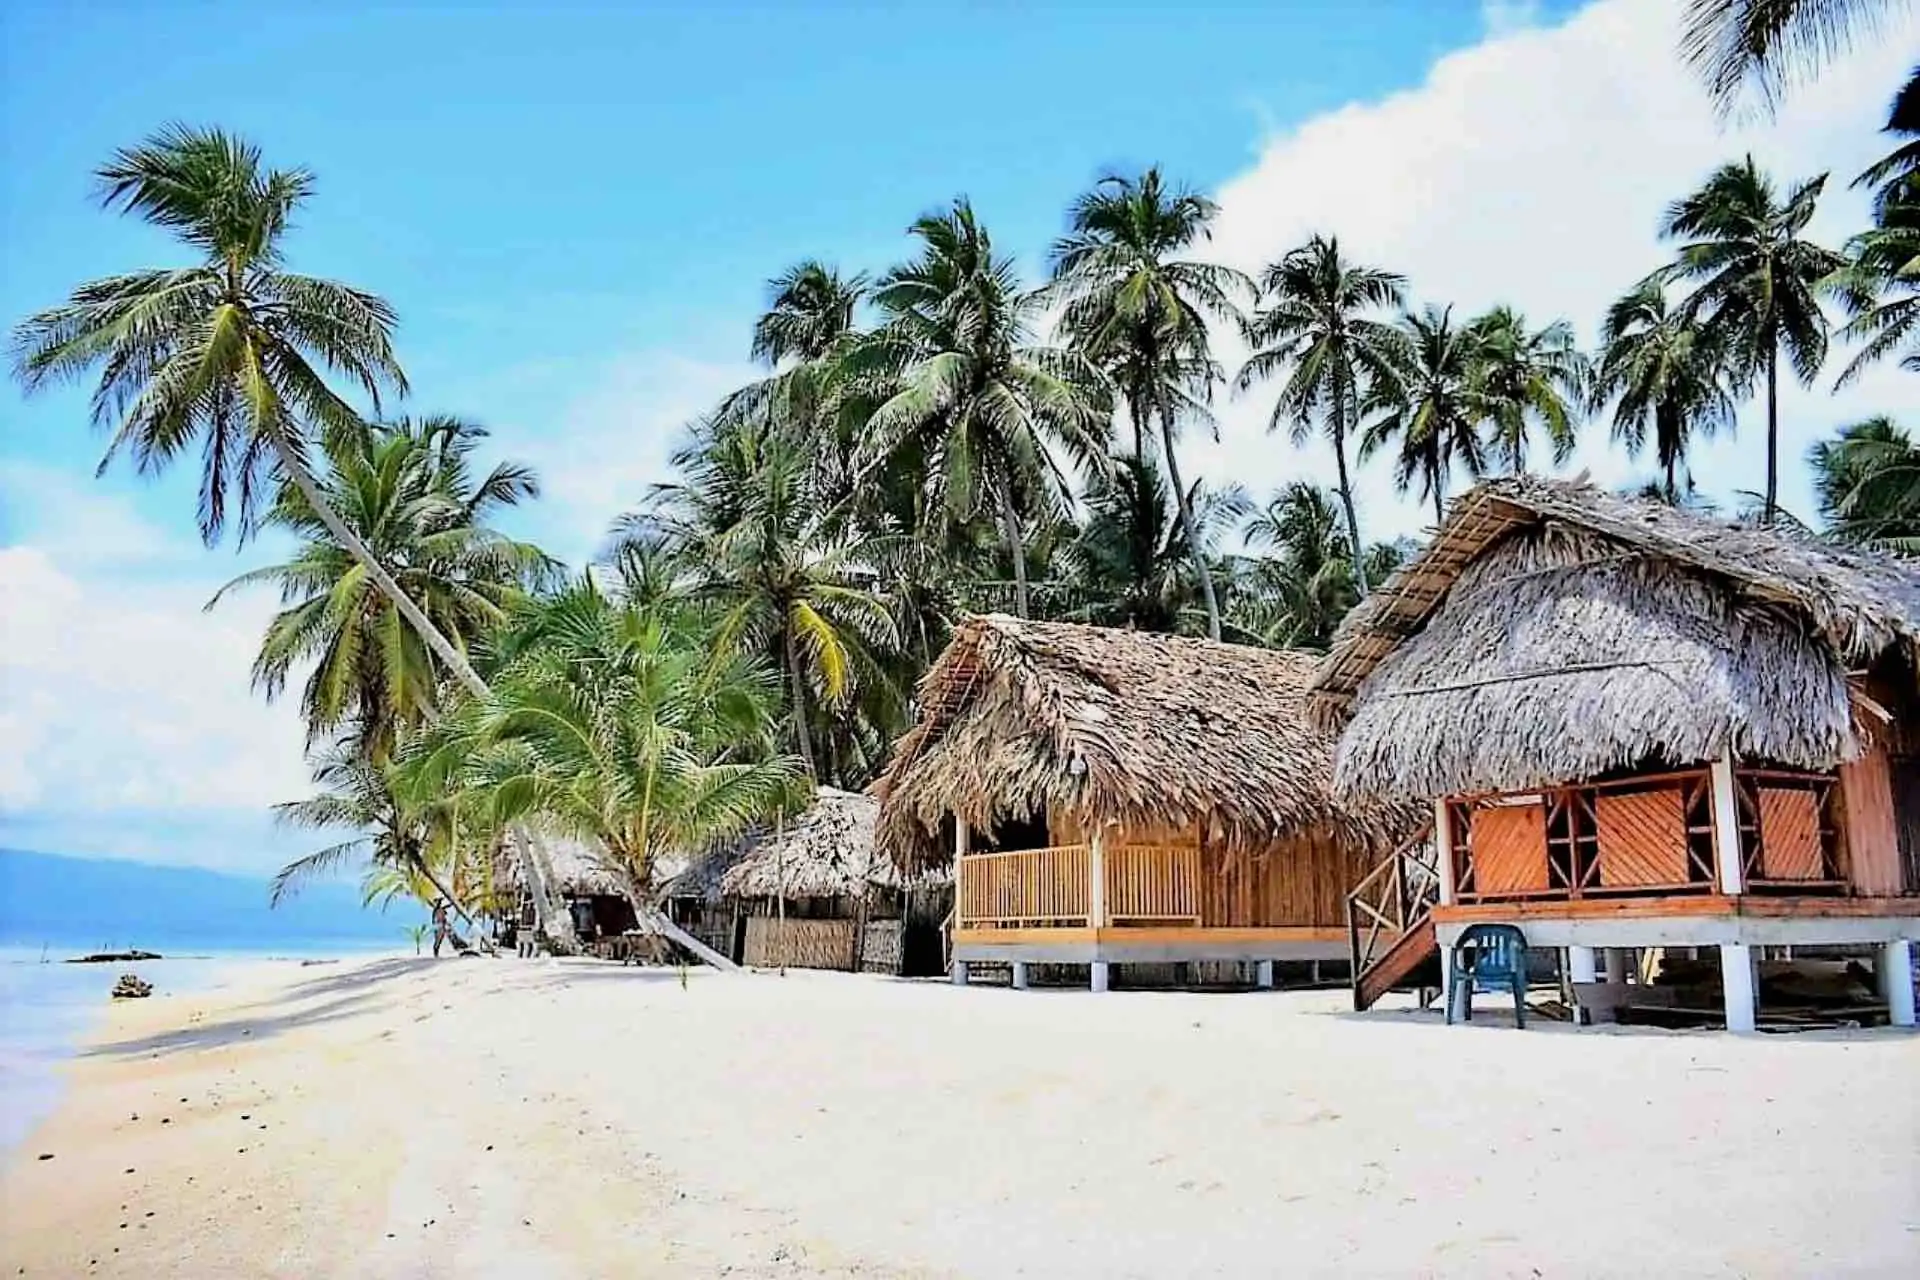 San Blas Tuba Senika Franklin island white sand beach cabins palm trees